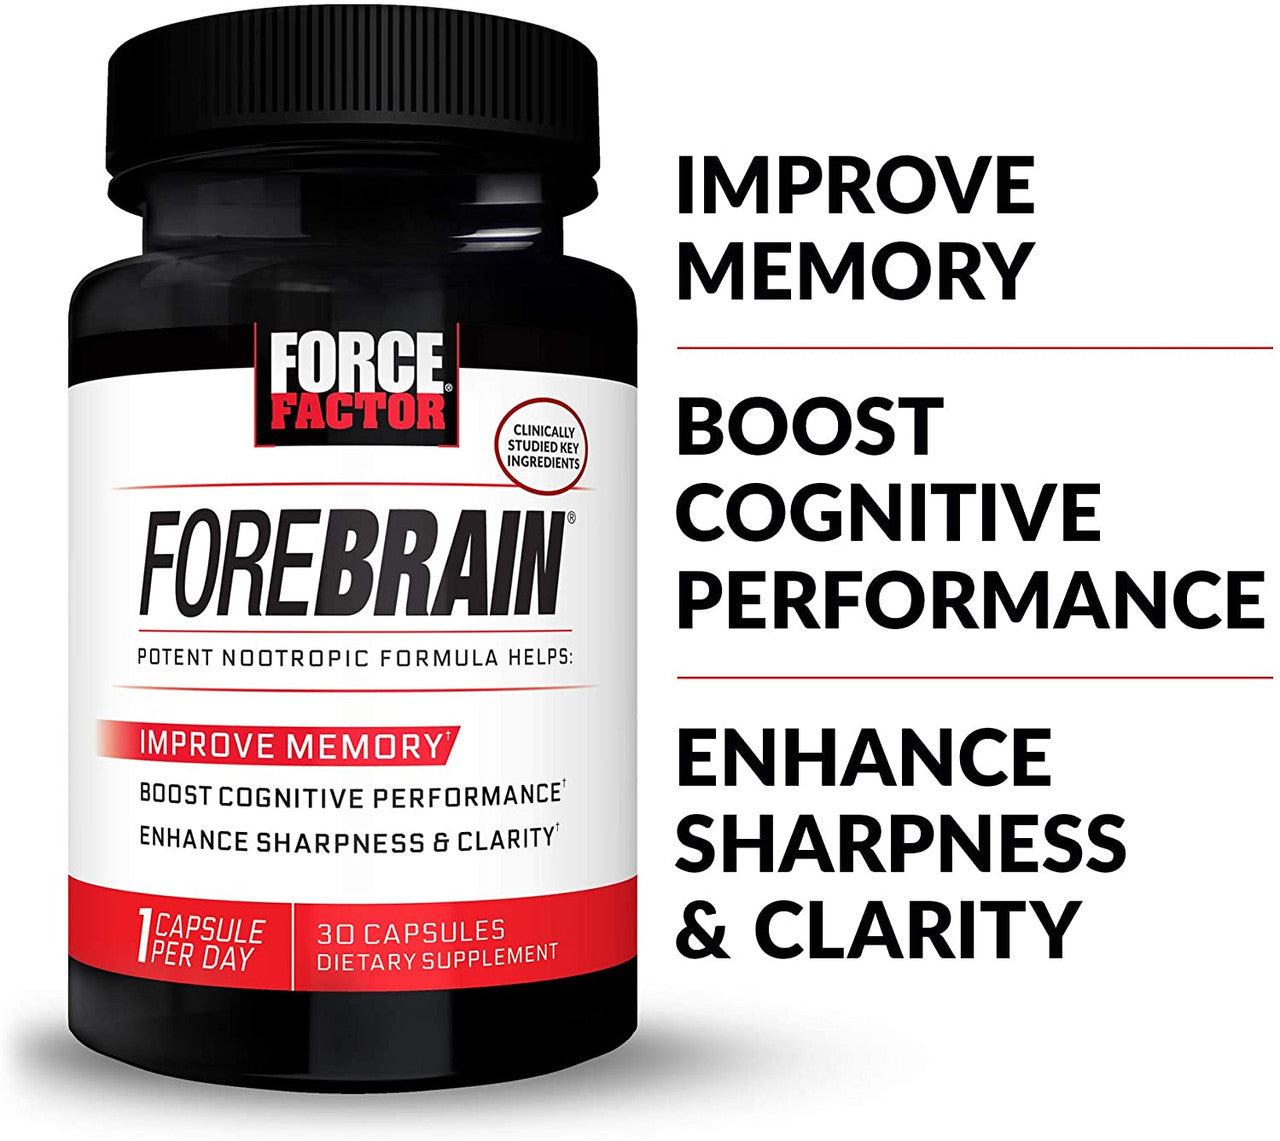 Force Factor ForeBrain key information